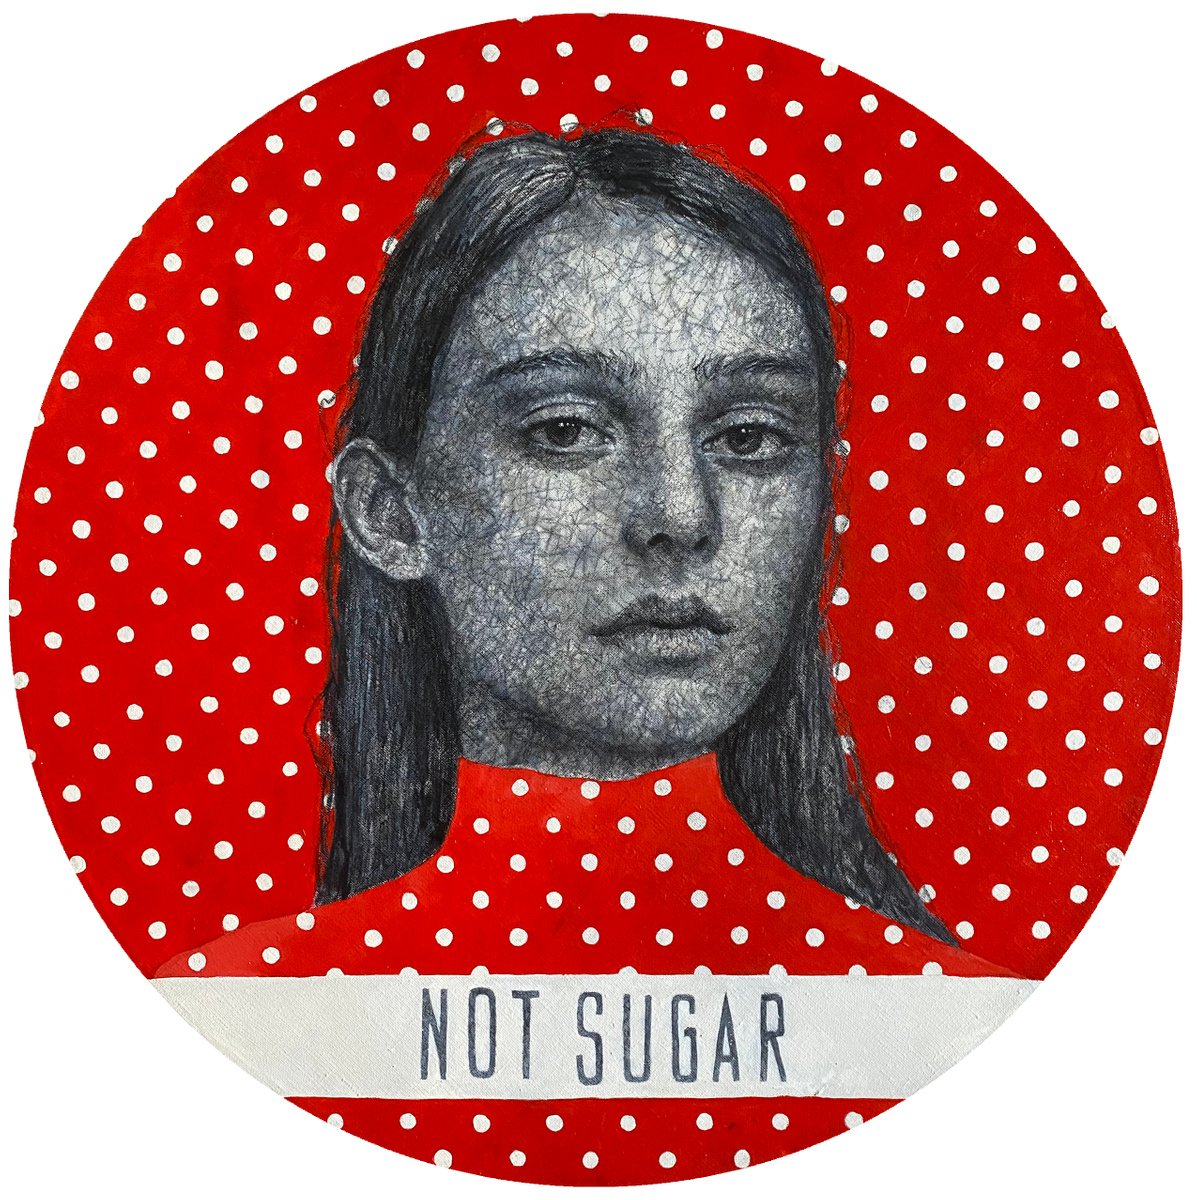 Not sugar by Margarita Ivanova